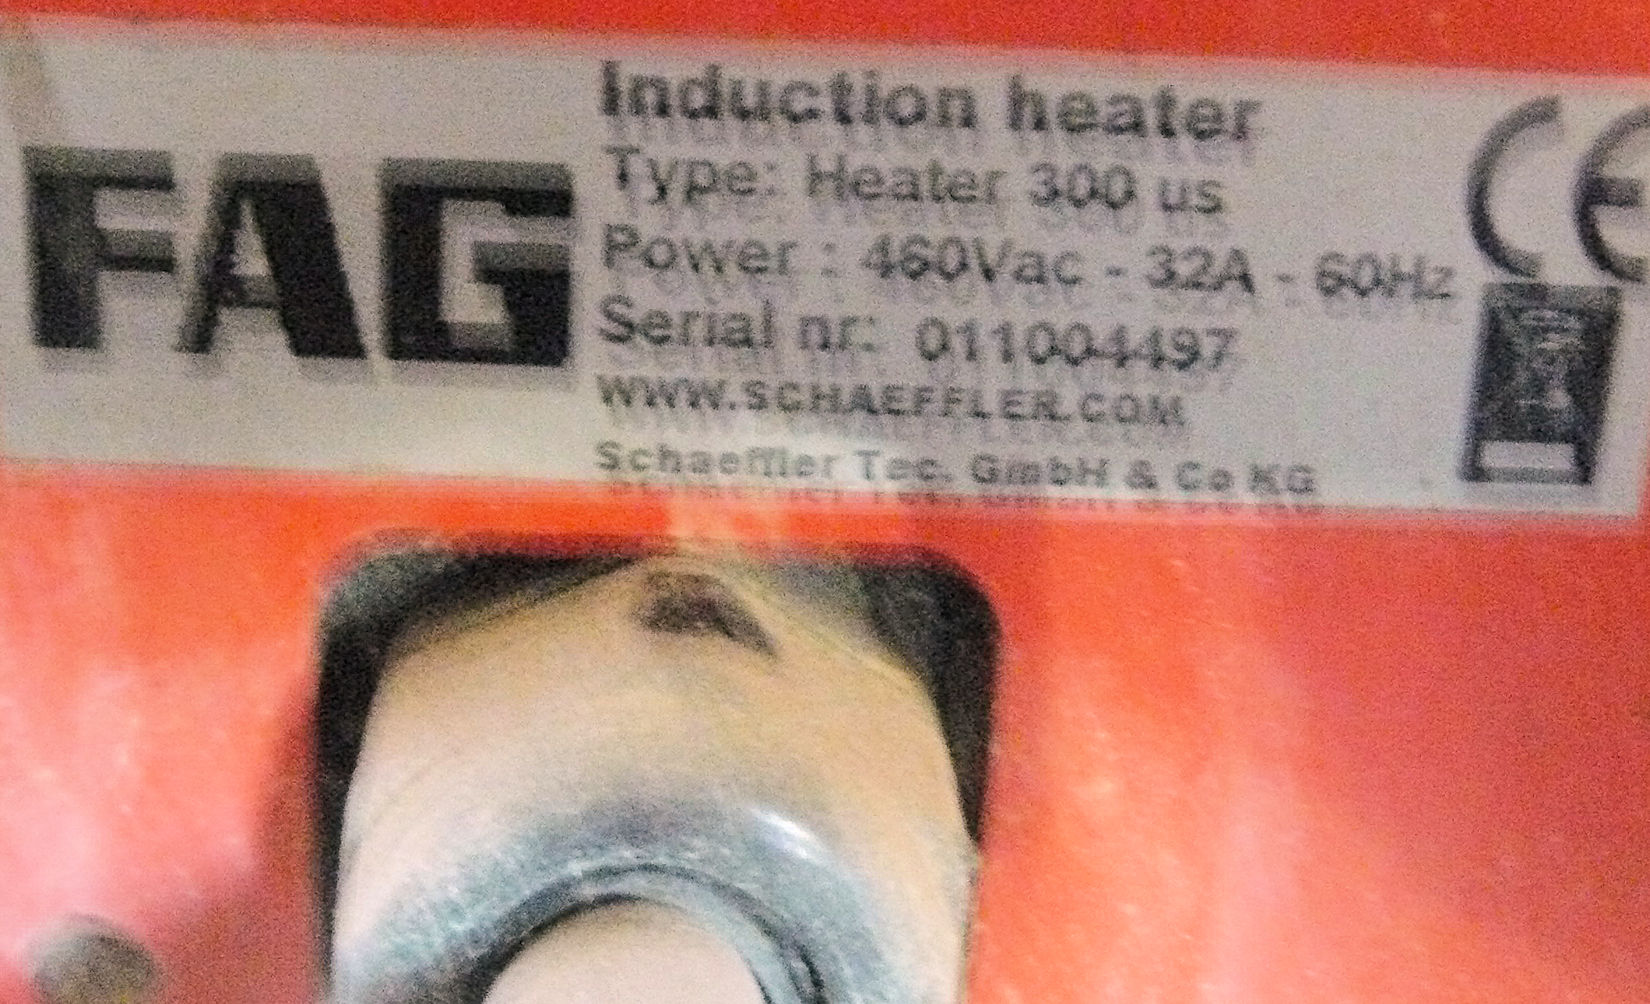 Fag Induction Heater - Bearing Heater, Type: Heater 300 Us)